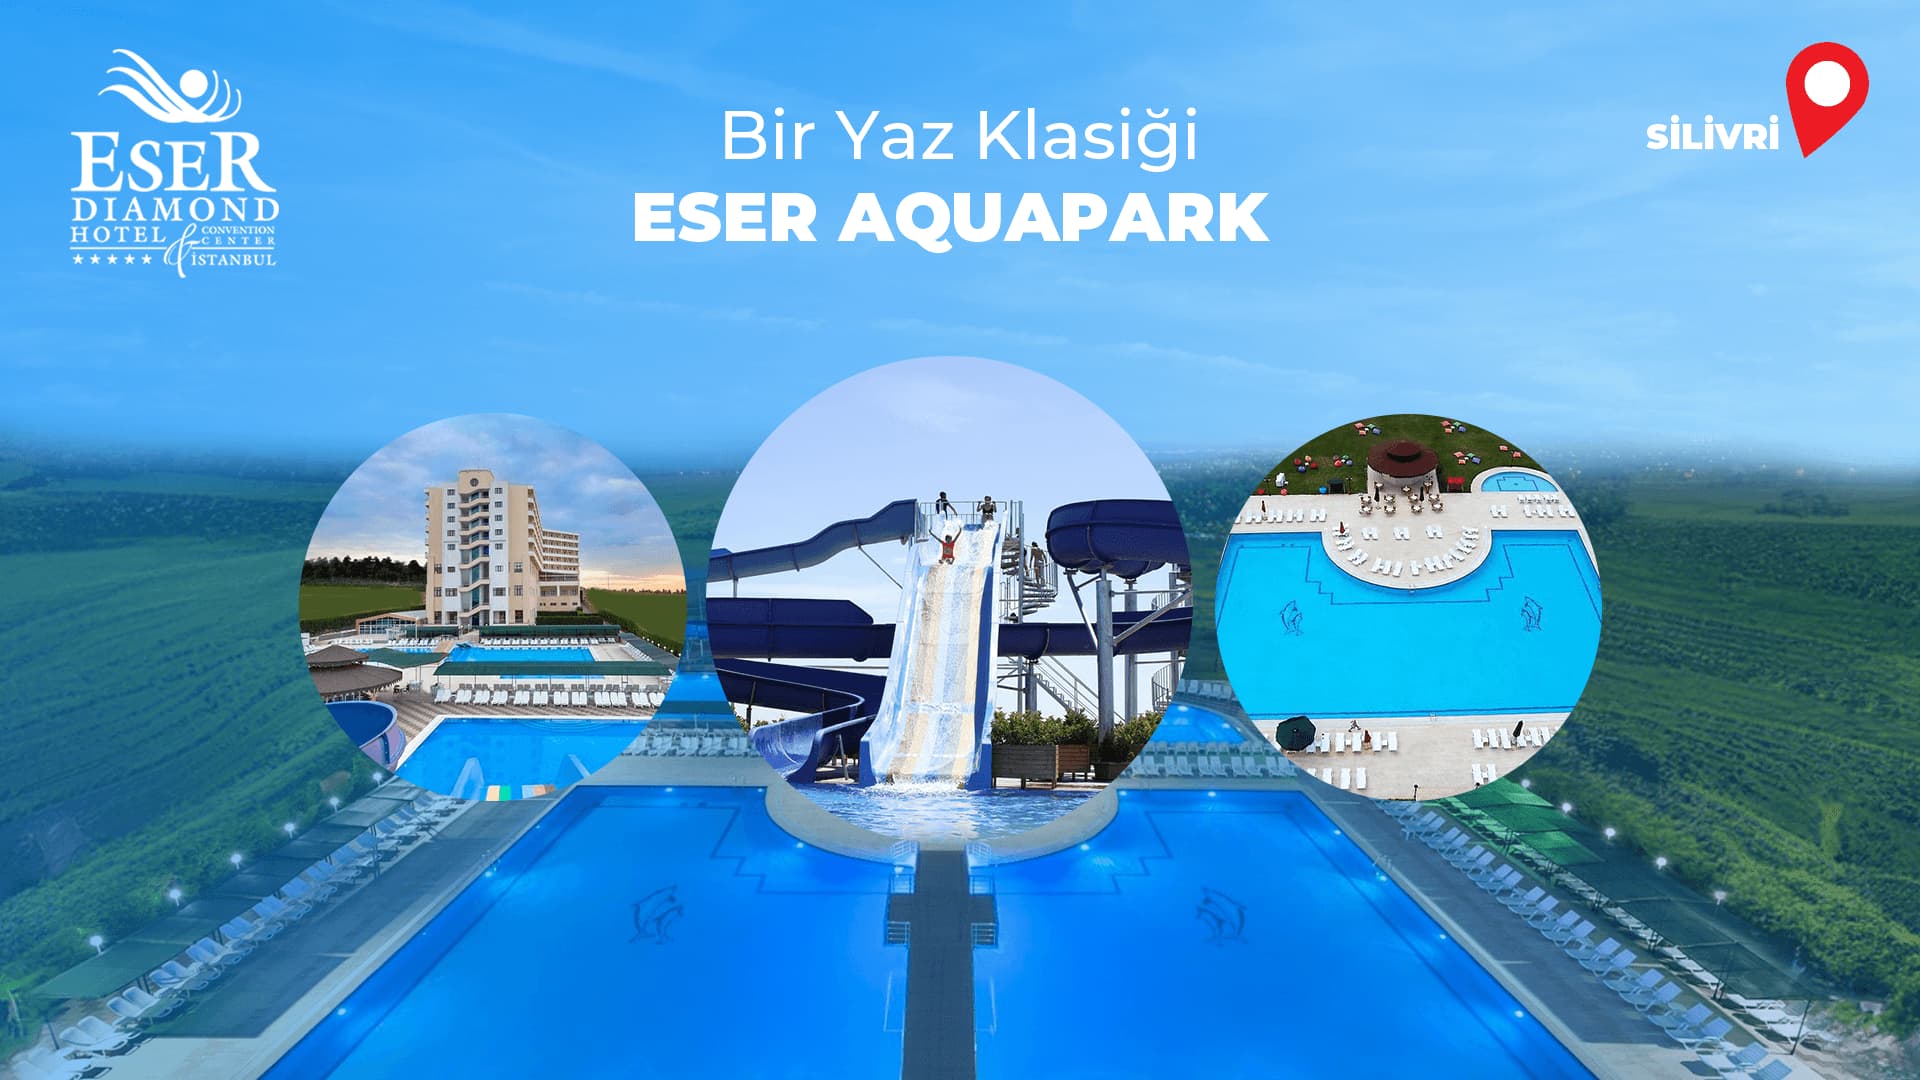 Eser Aquapark